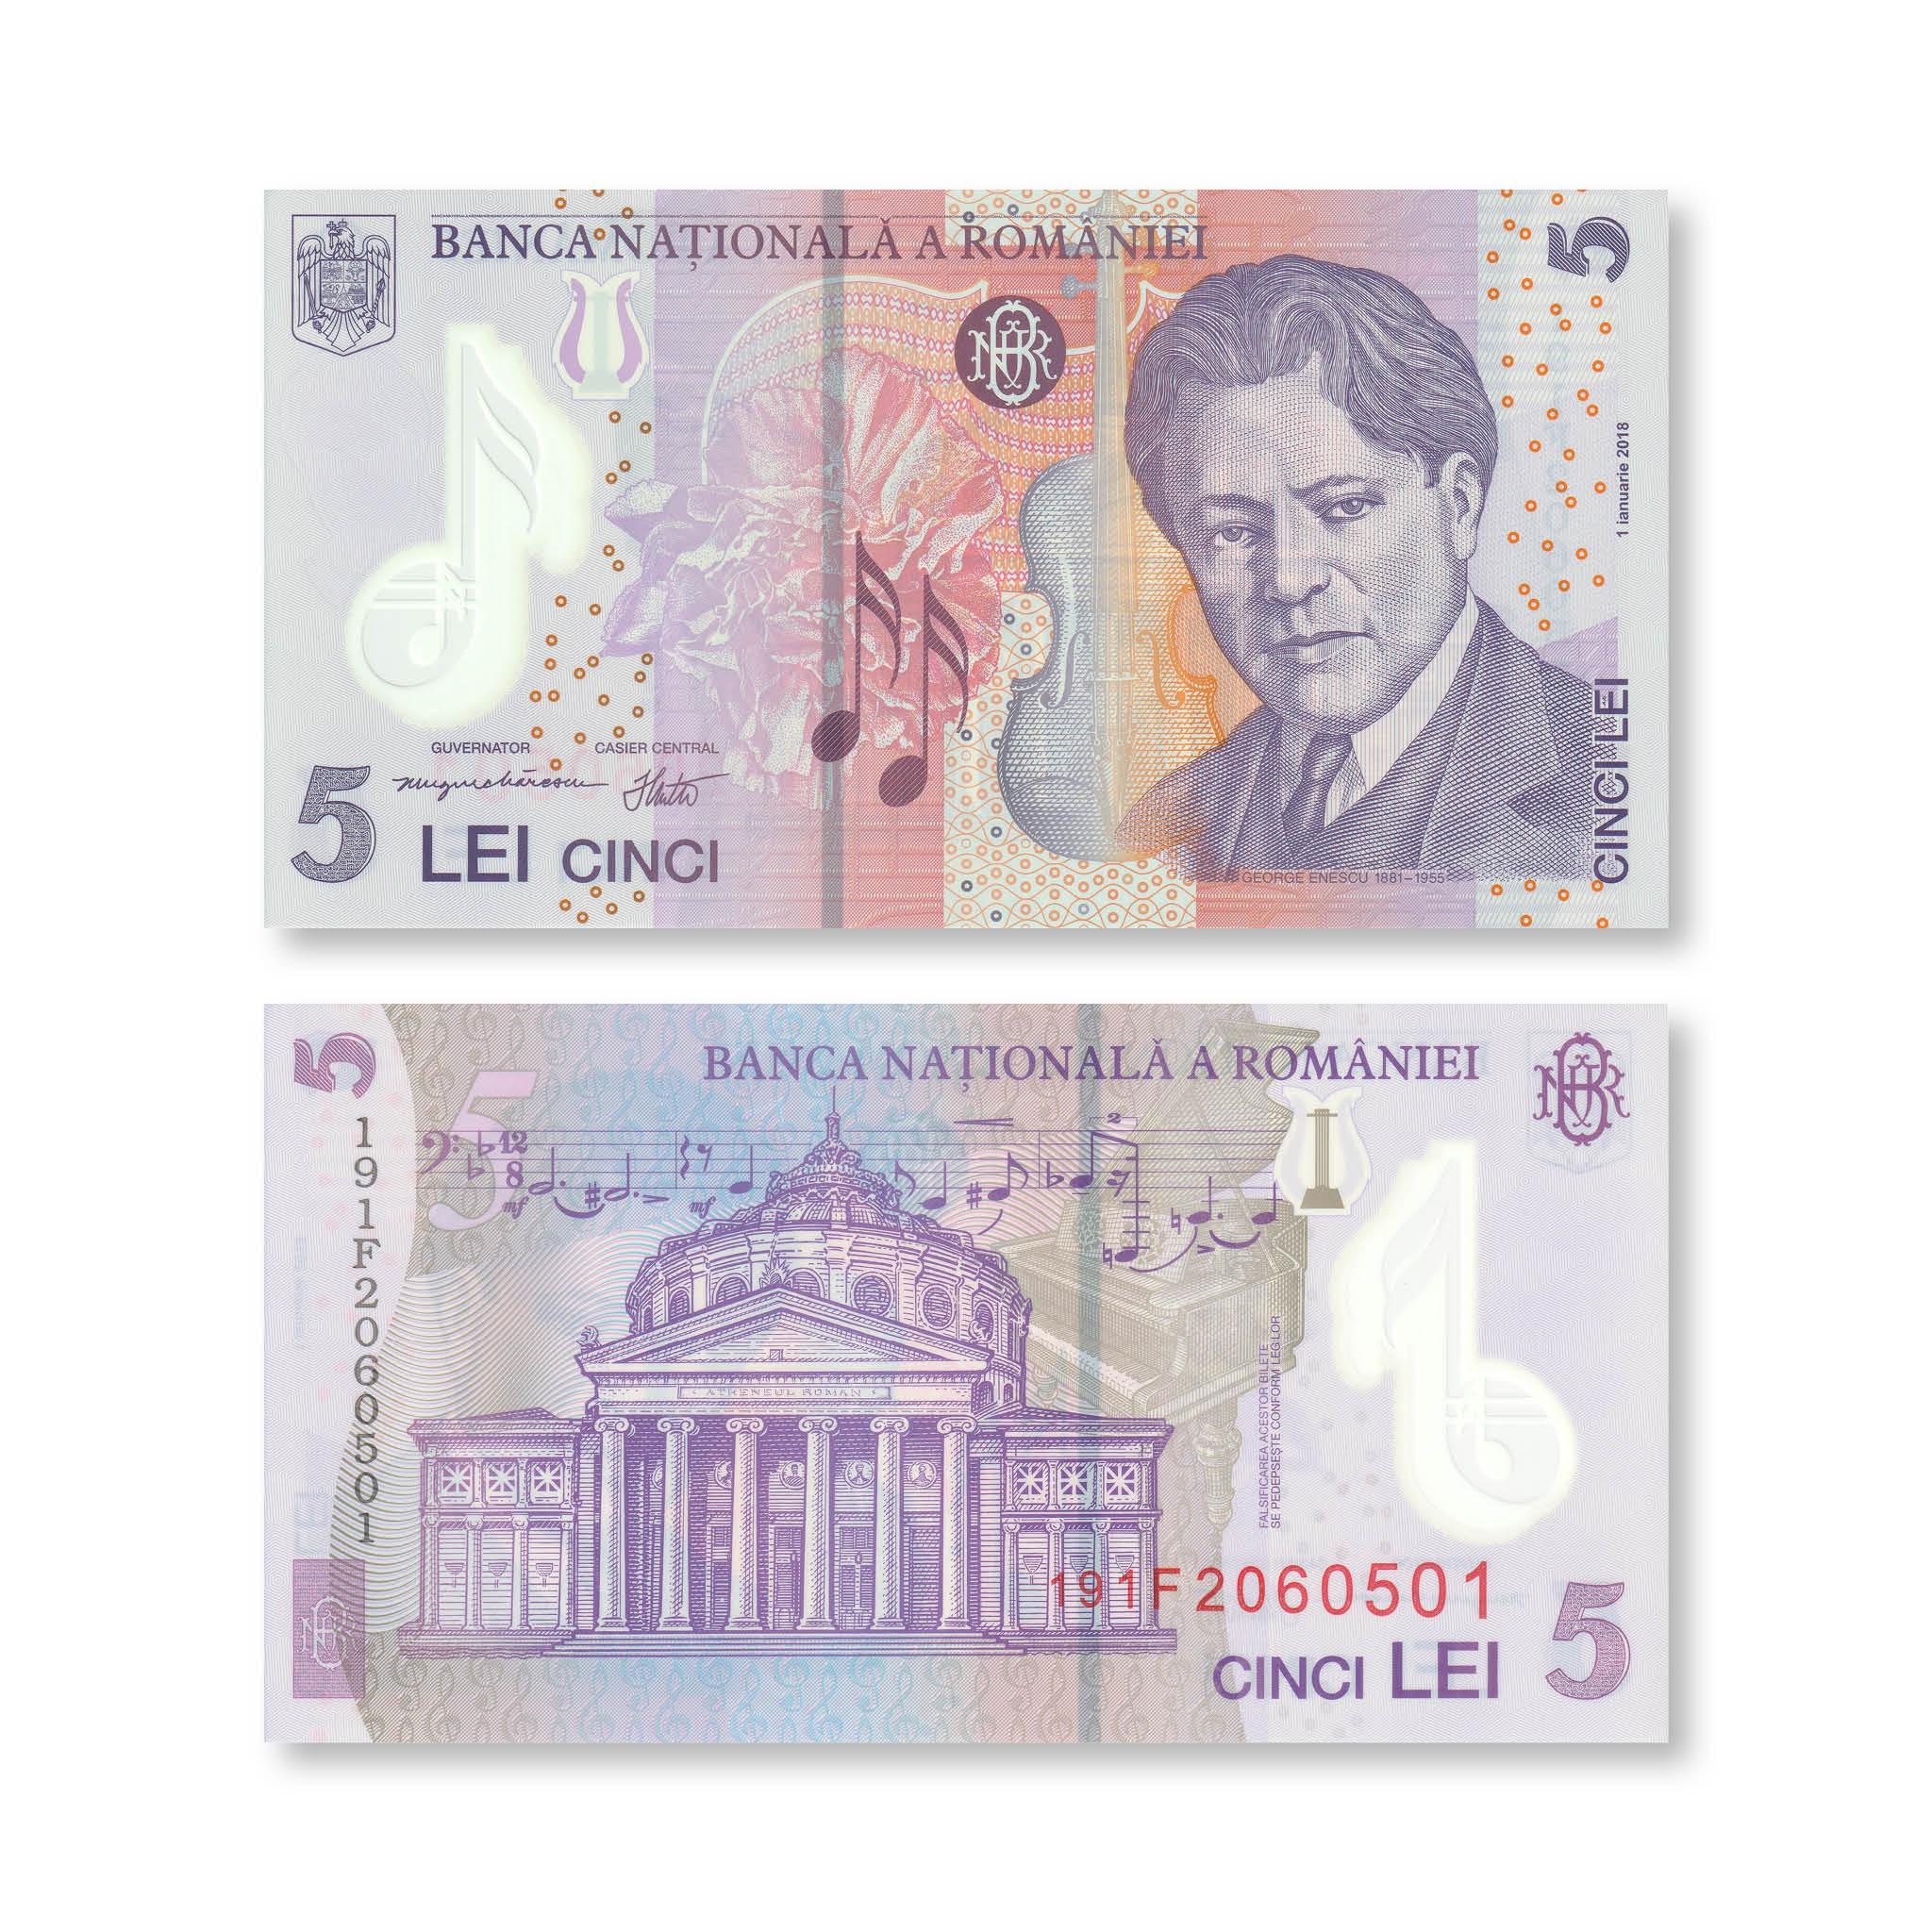 Romania 5 Lei, 2018 (2019), B287b, P118, UNC - Robert's World Money - World Banknotes